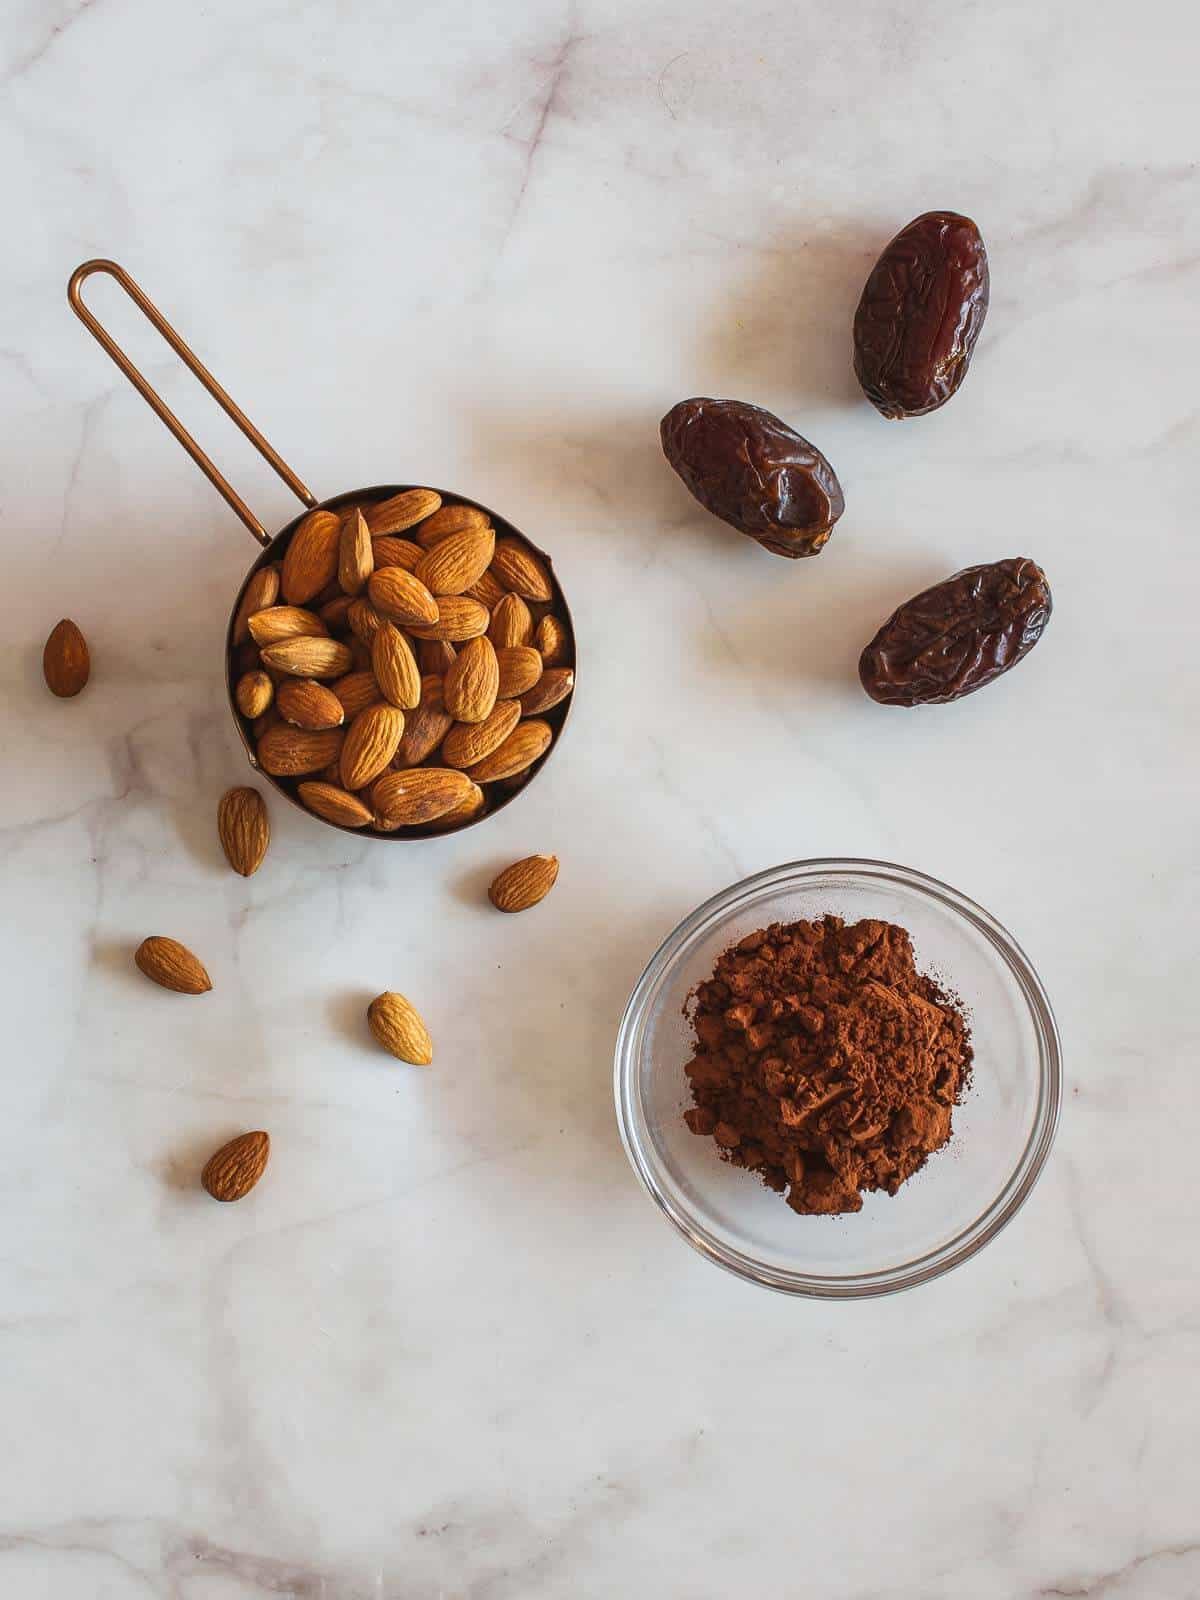 vegan chocolate milk ingredients, almonds, dates and cocoa powder